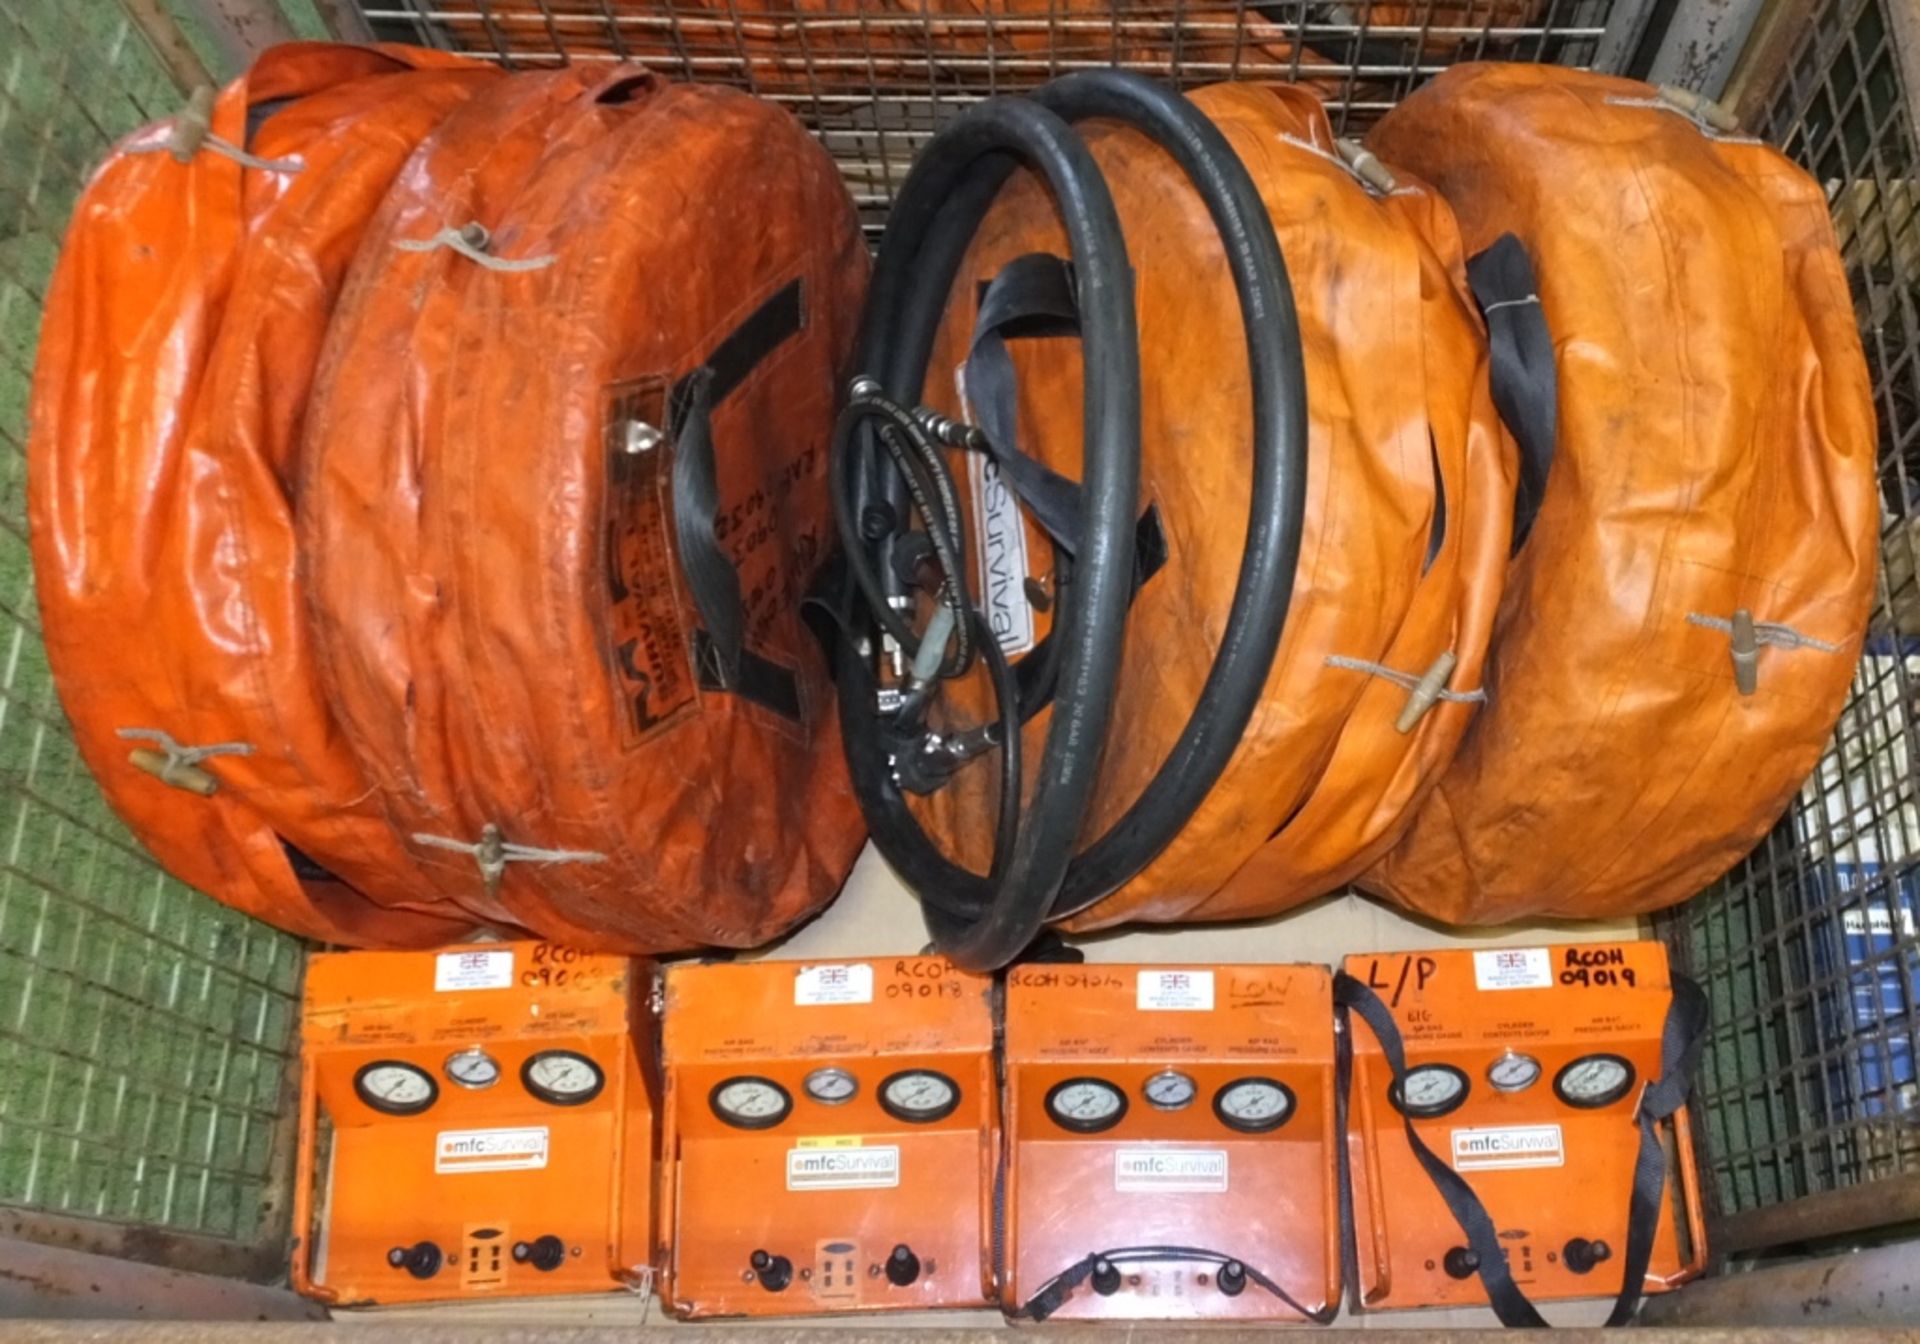 MFC Air Bag Set - Air bags, Hose assemblies, control panels